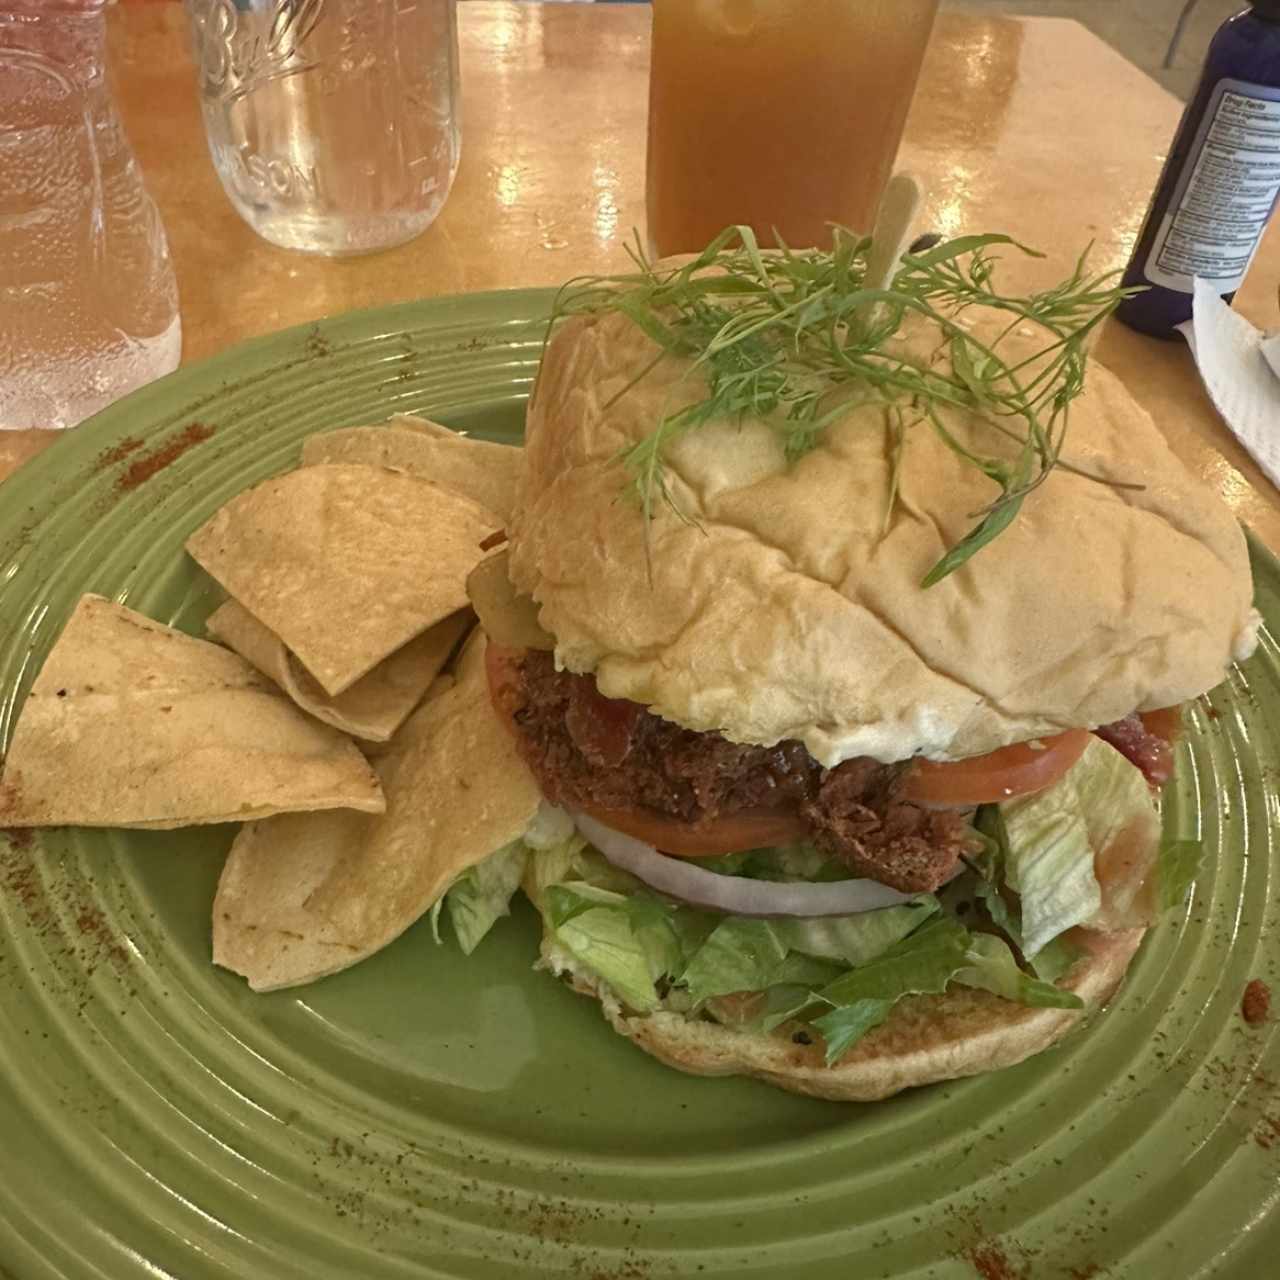 Vegan Burger